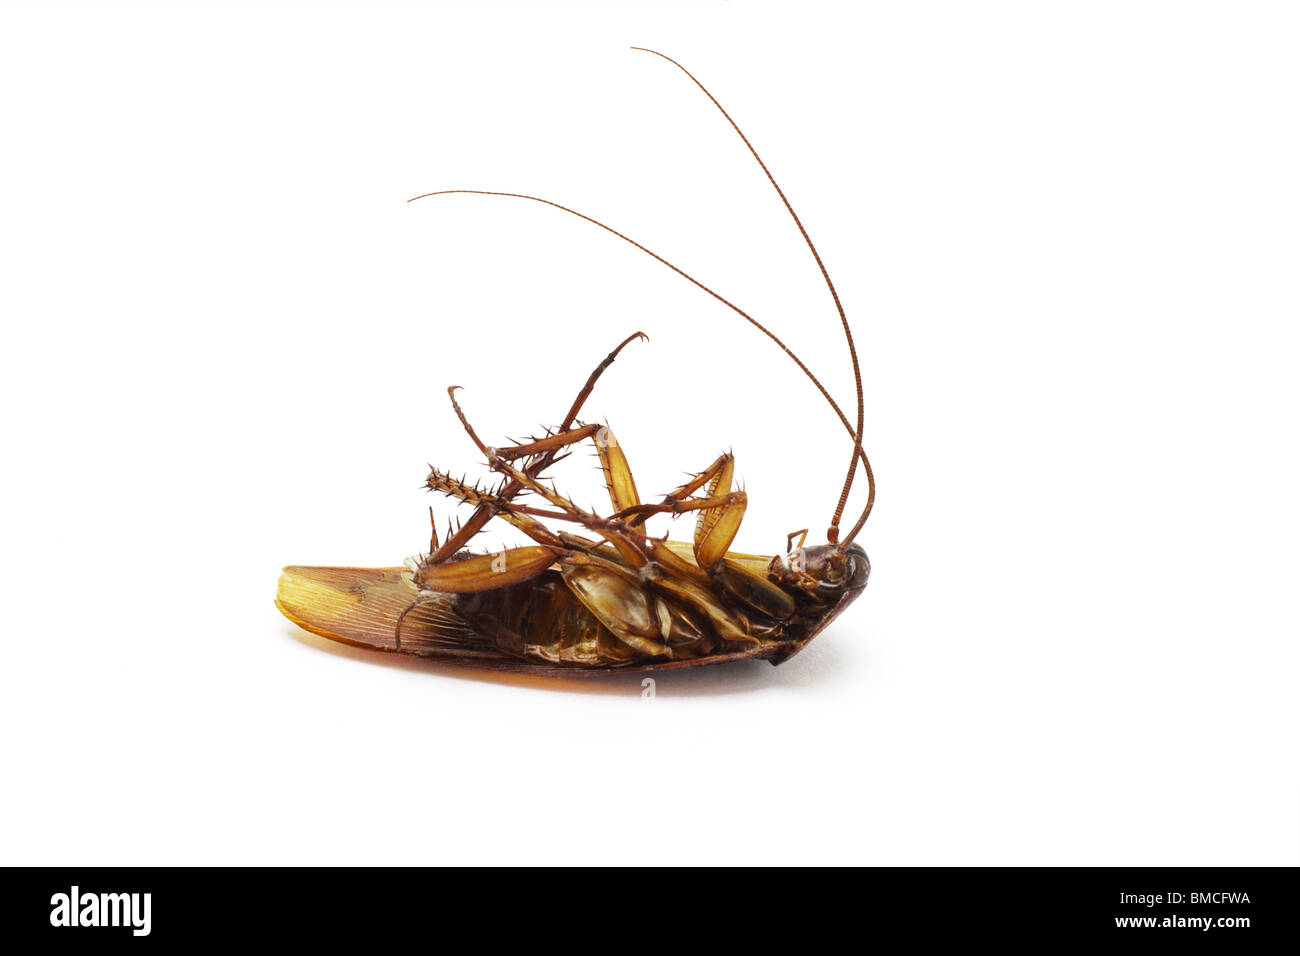 Cucaracha muerta con sensores de largo sobre fondo blanco. Foto de stock